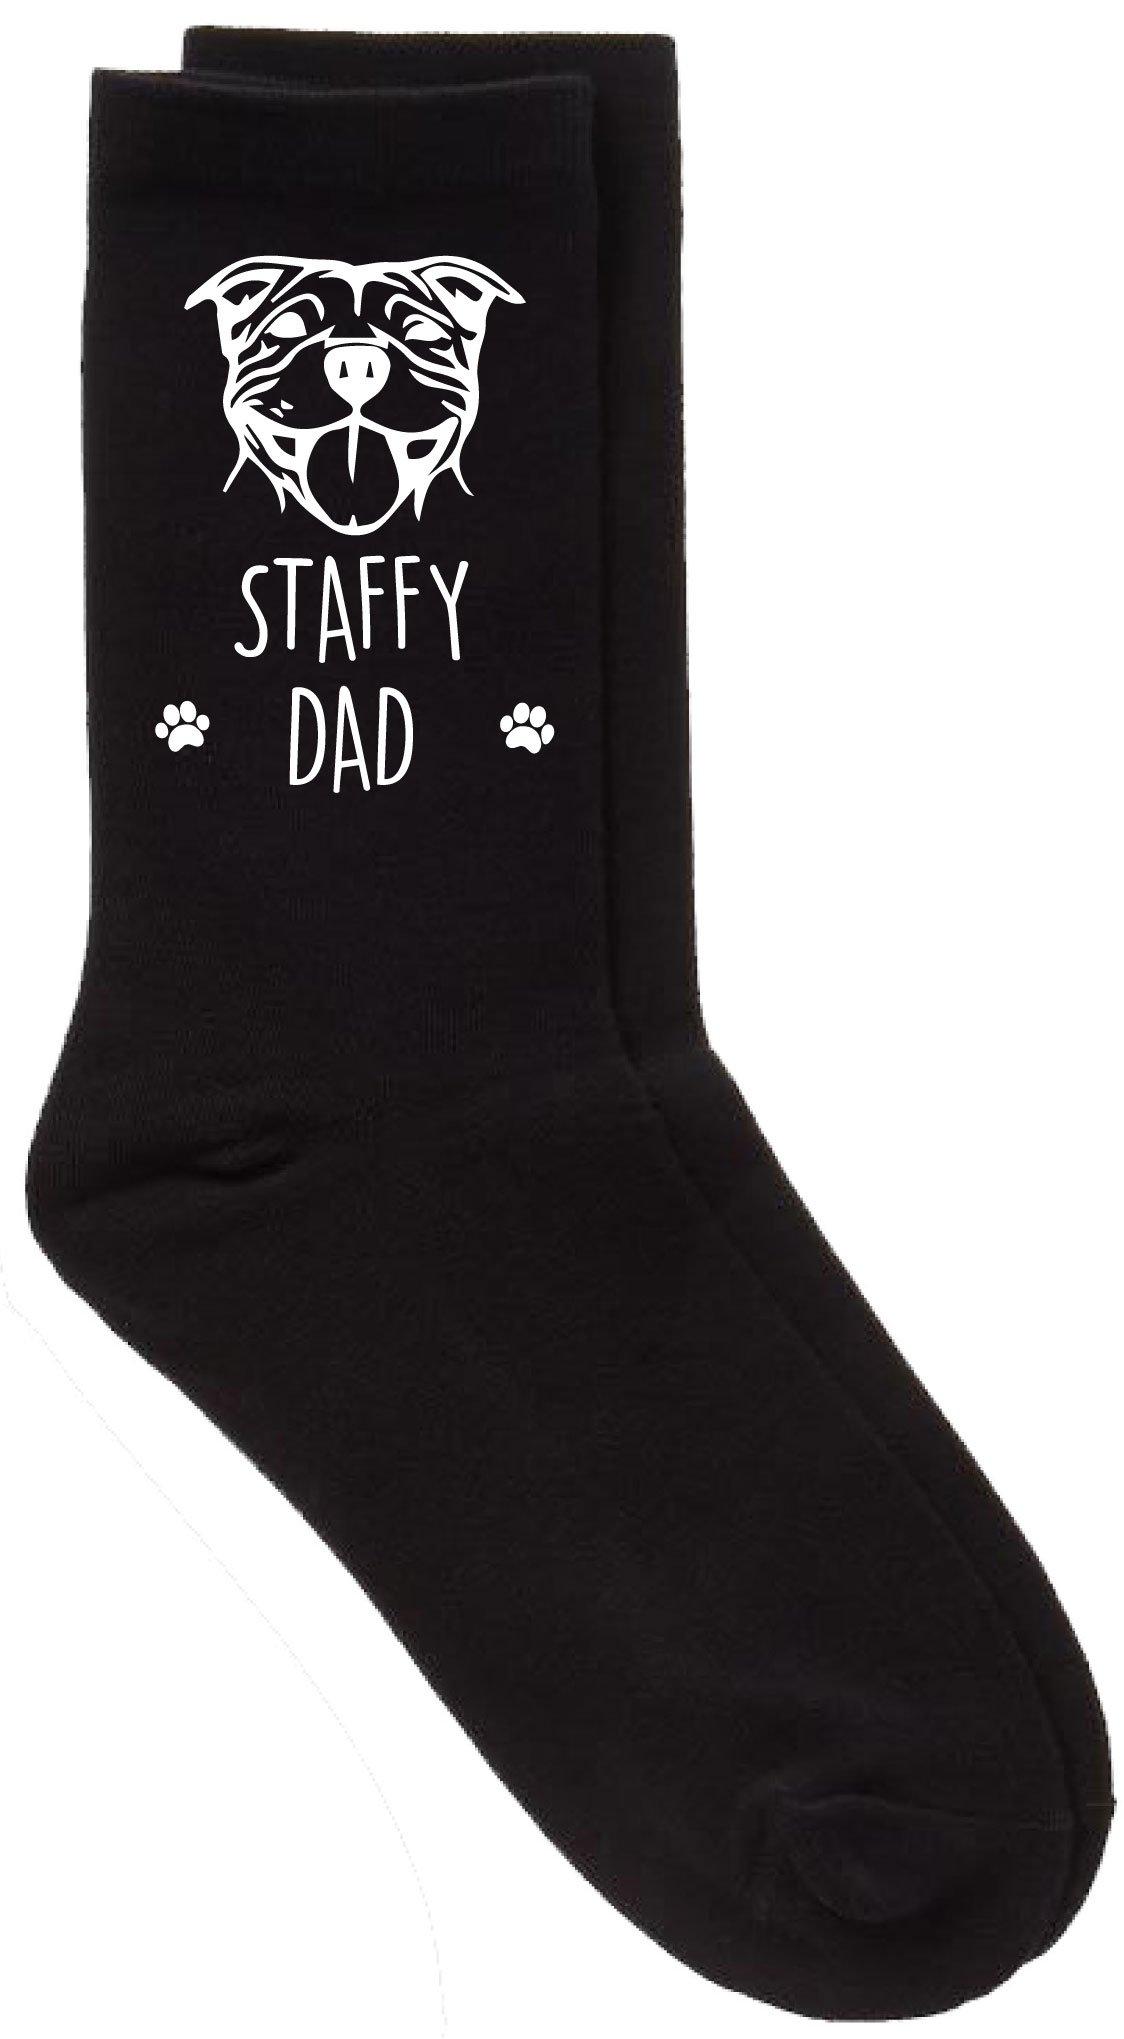 Staffy Dad Black Calf Socks